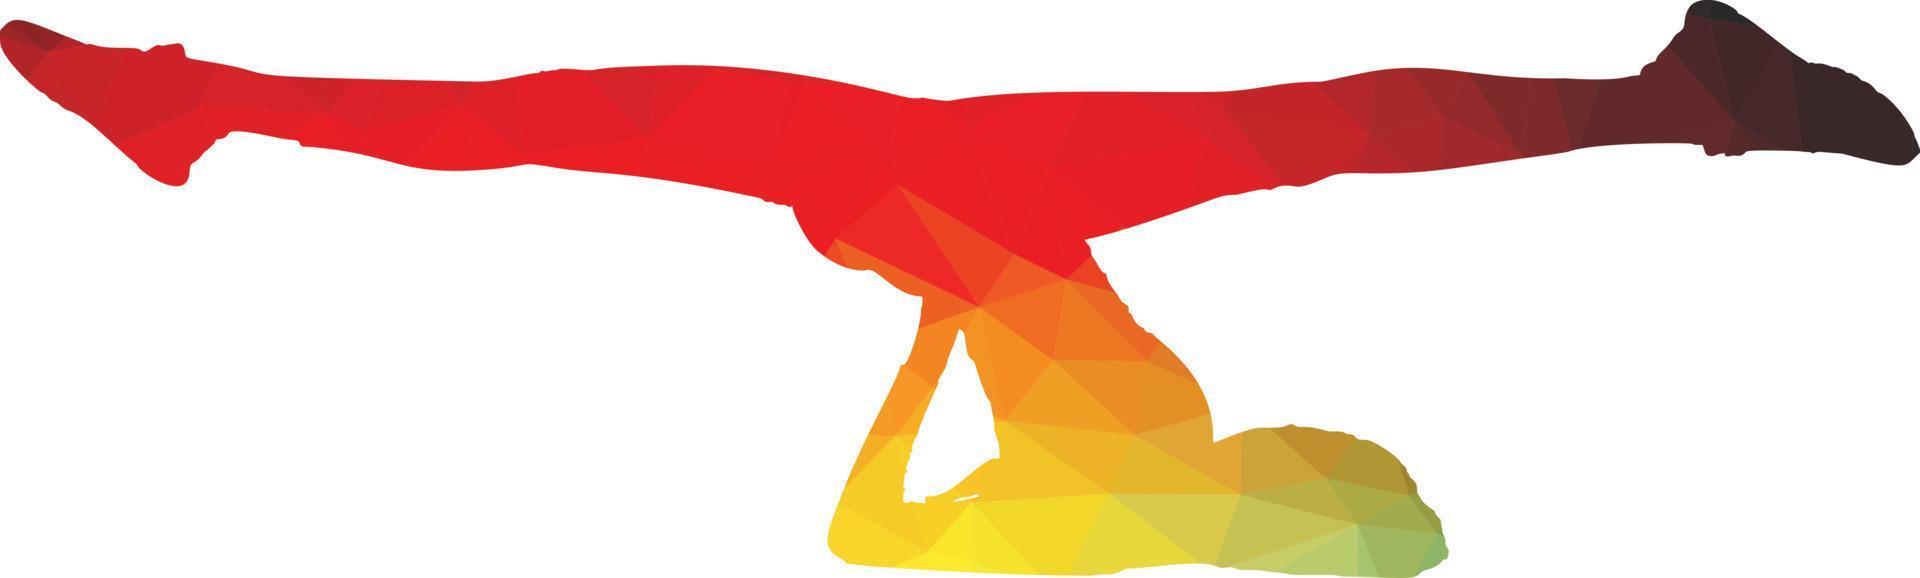 farbig Silhouette von ein Person tun Yoga vektor